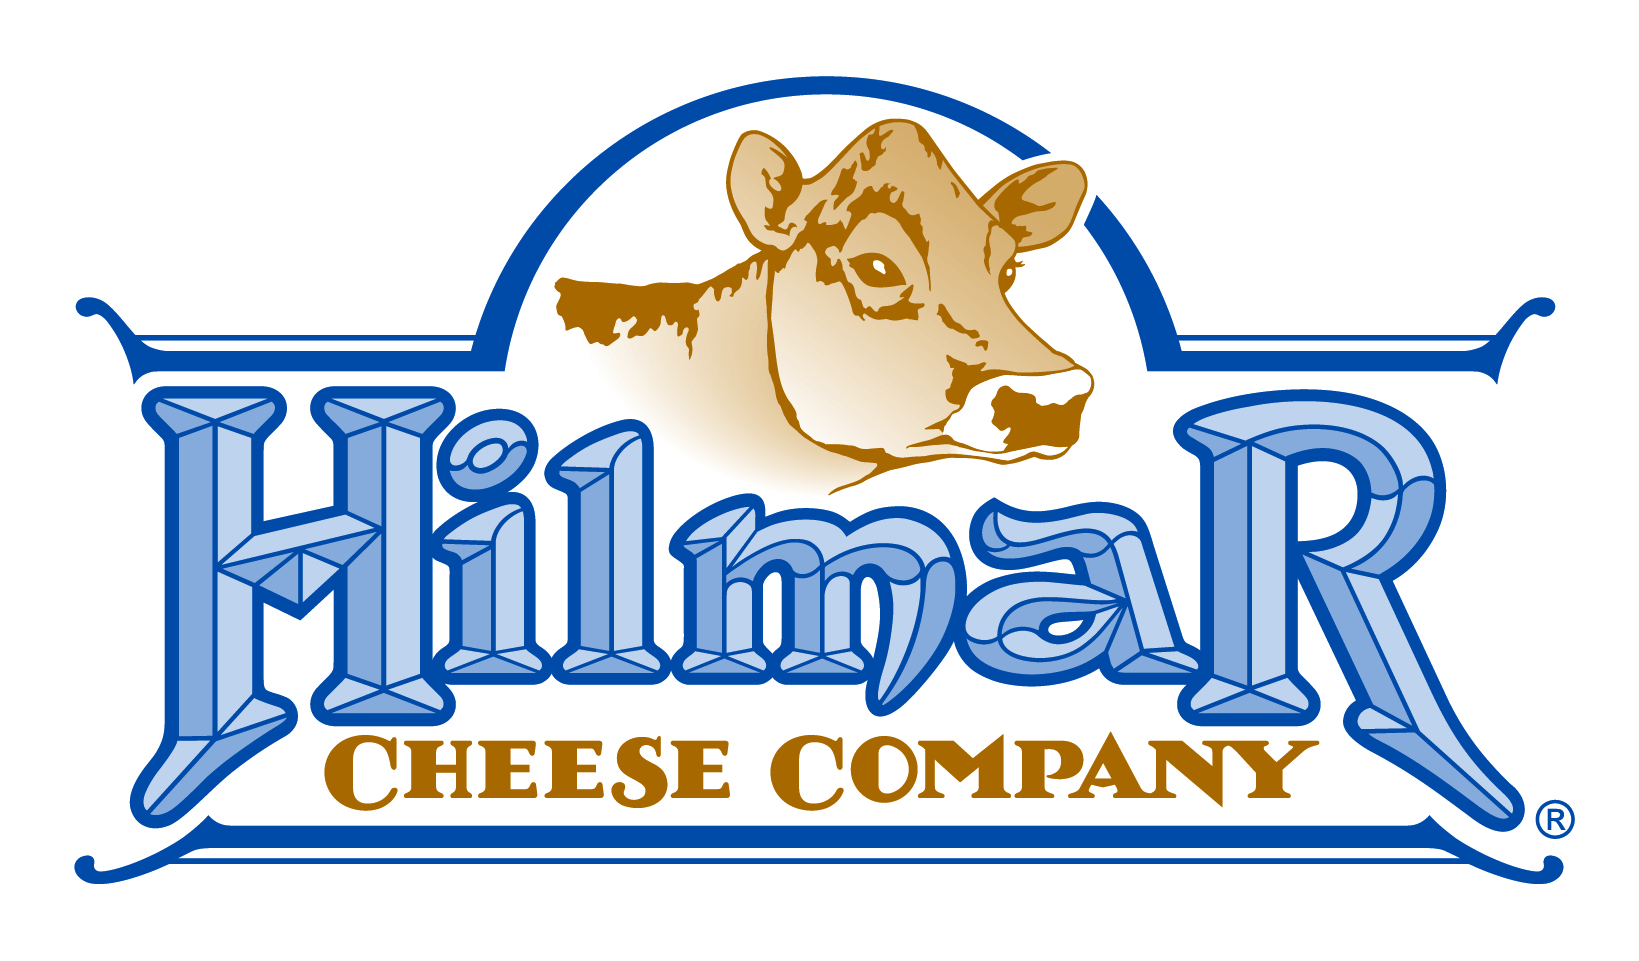 Hilmar cheese company logo